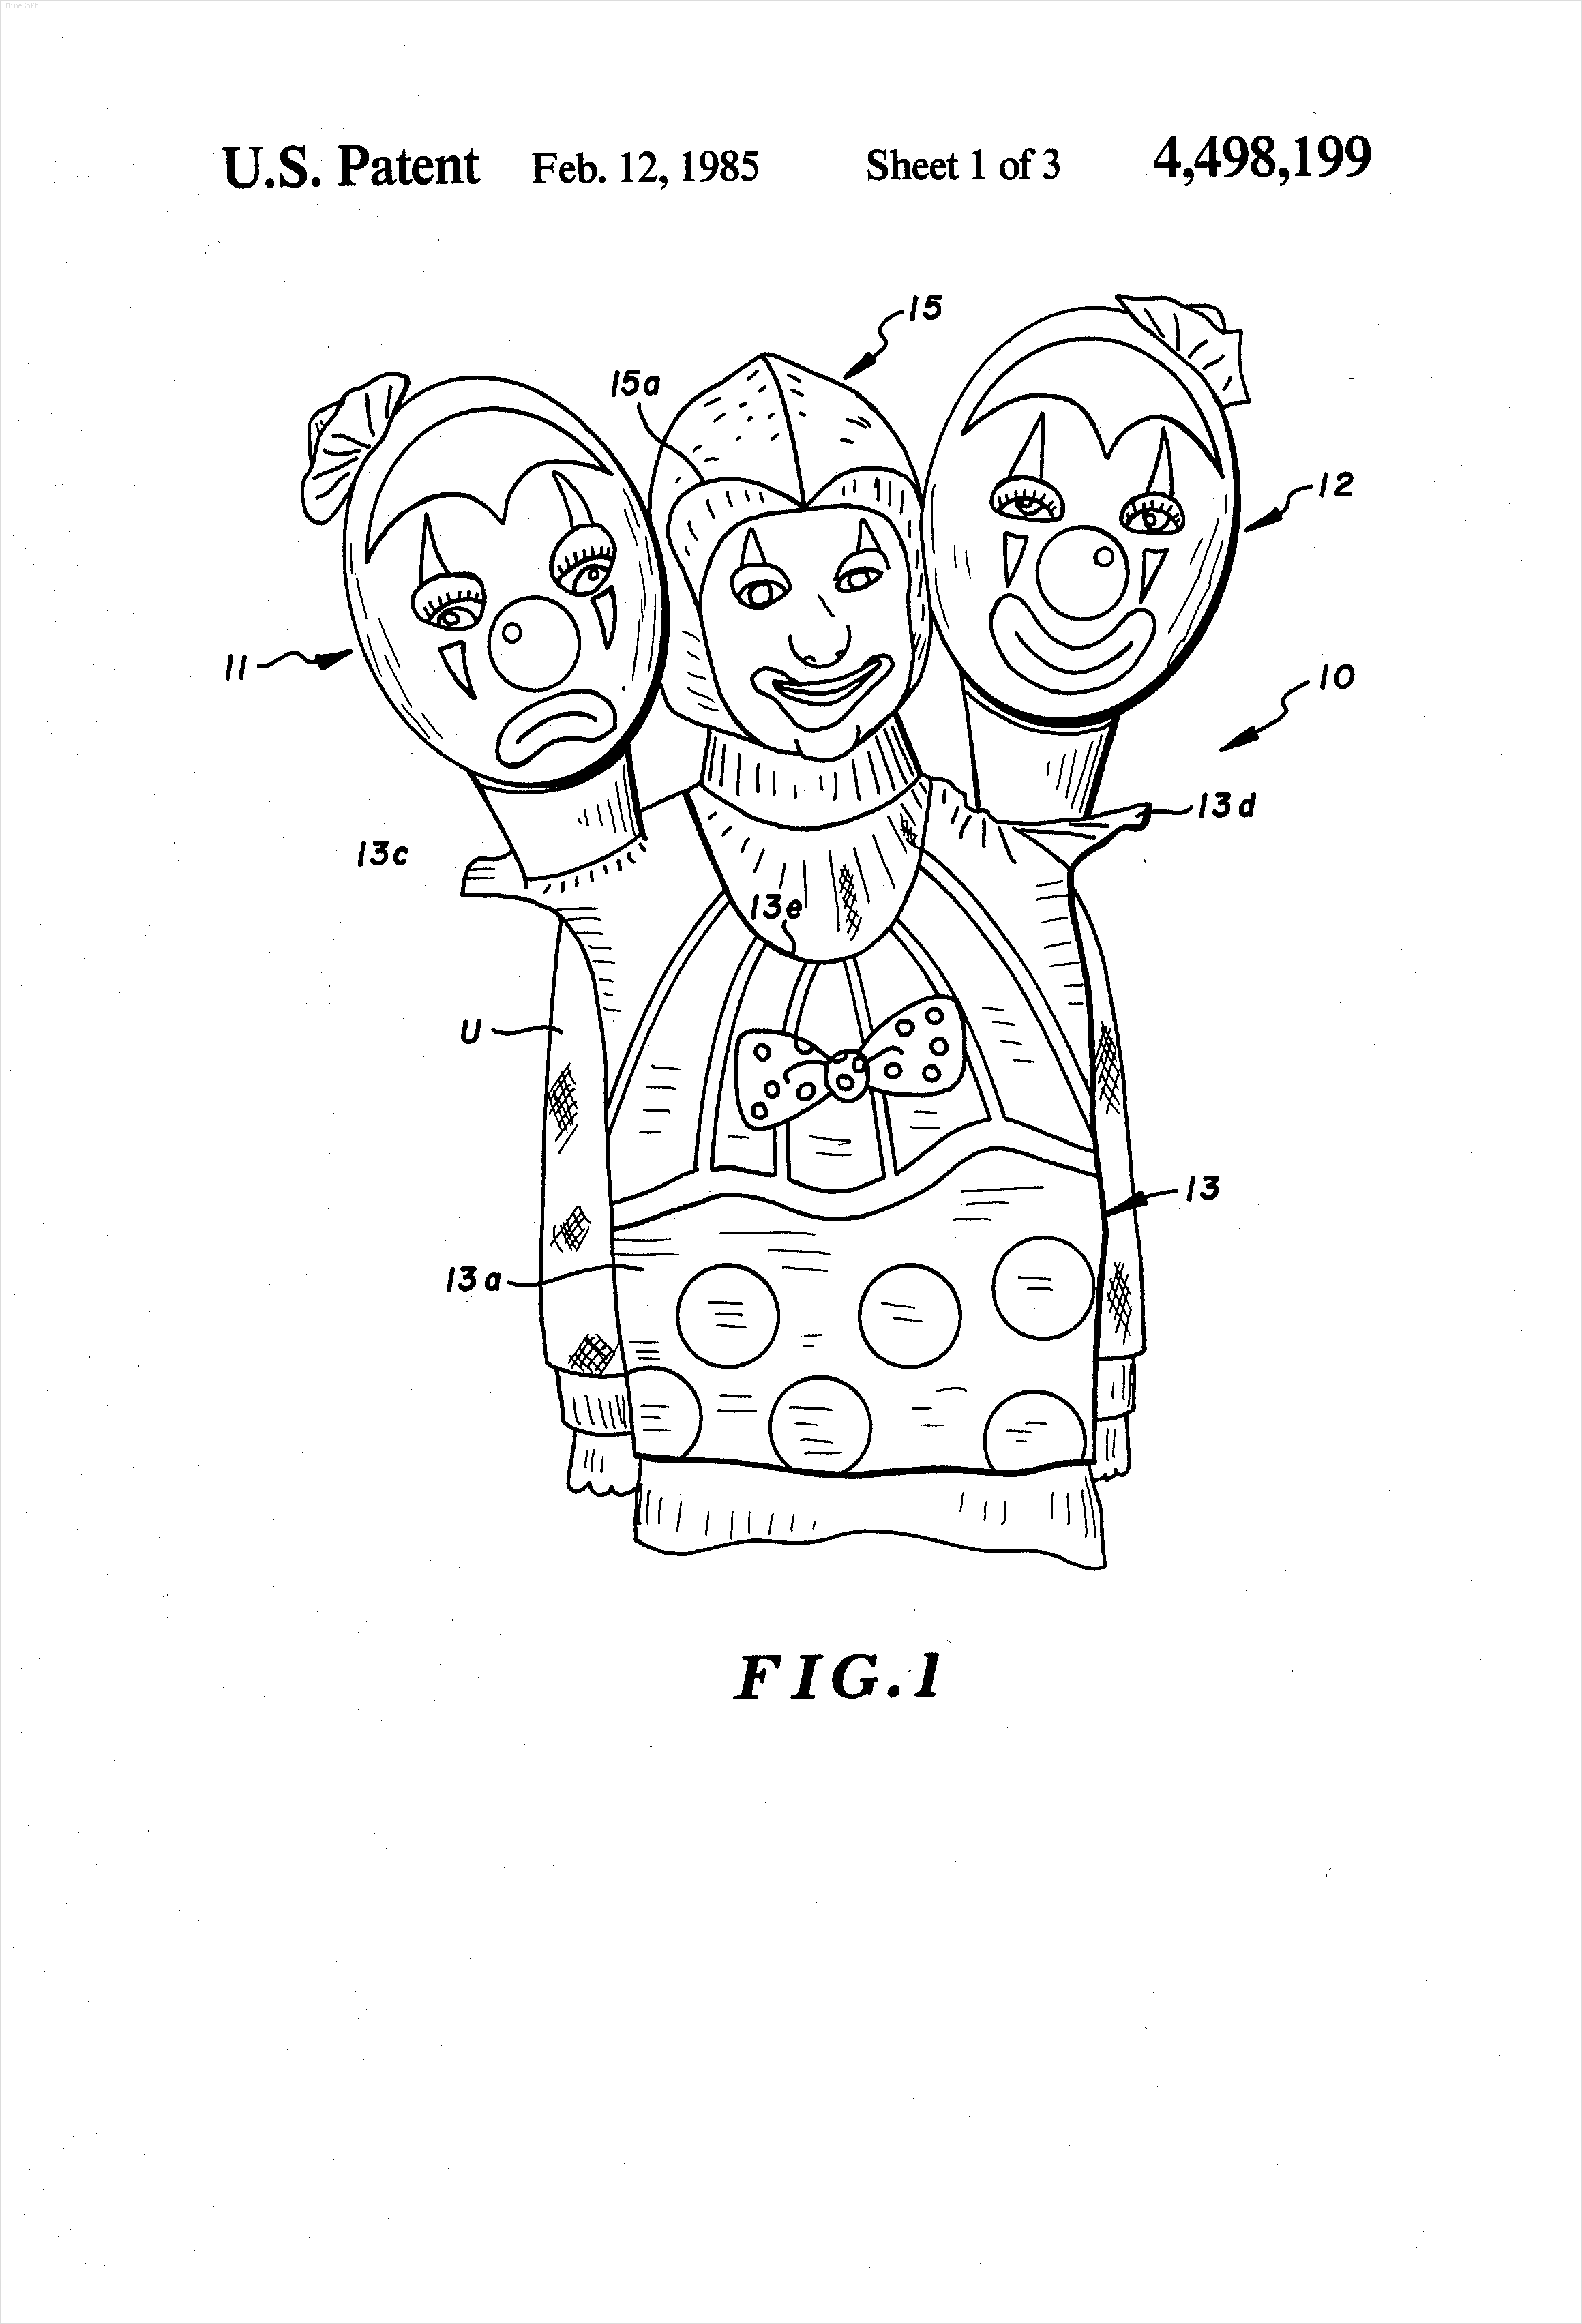 Halloween patent image